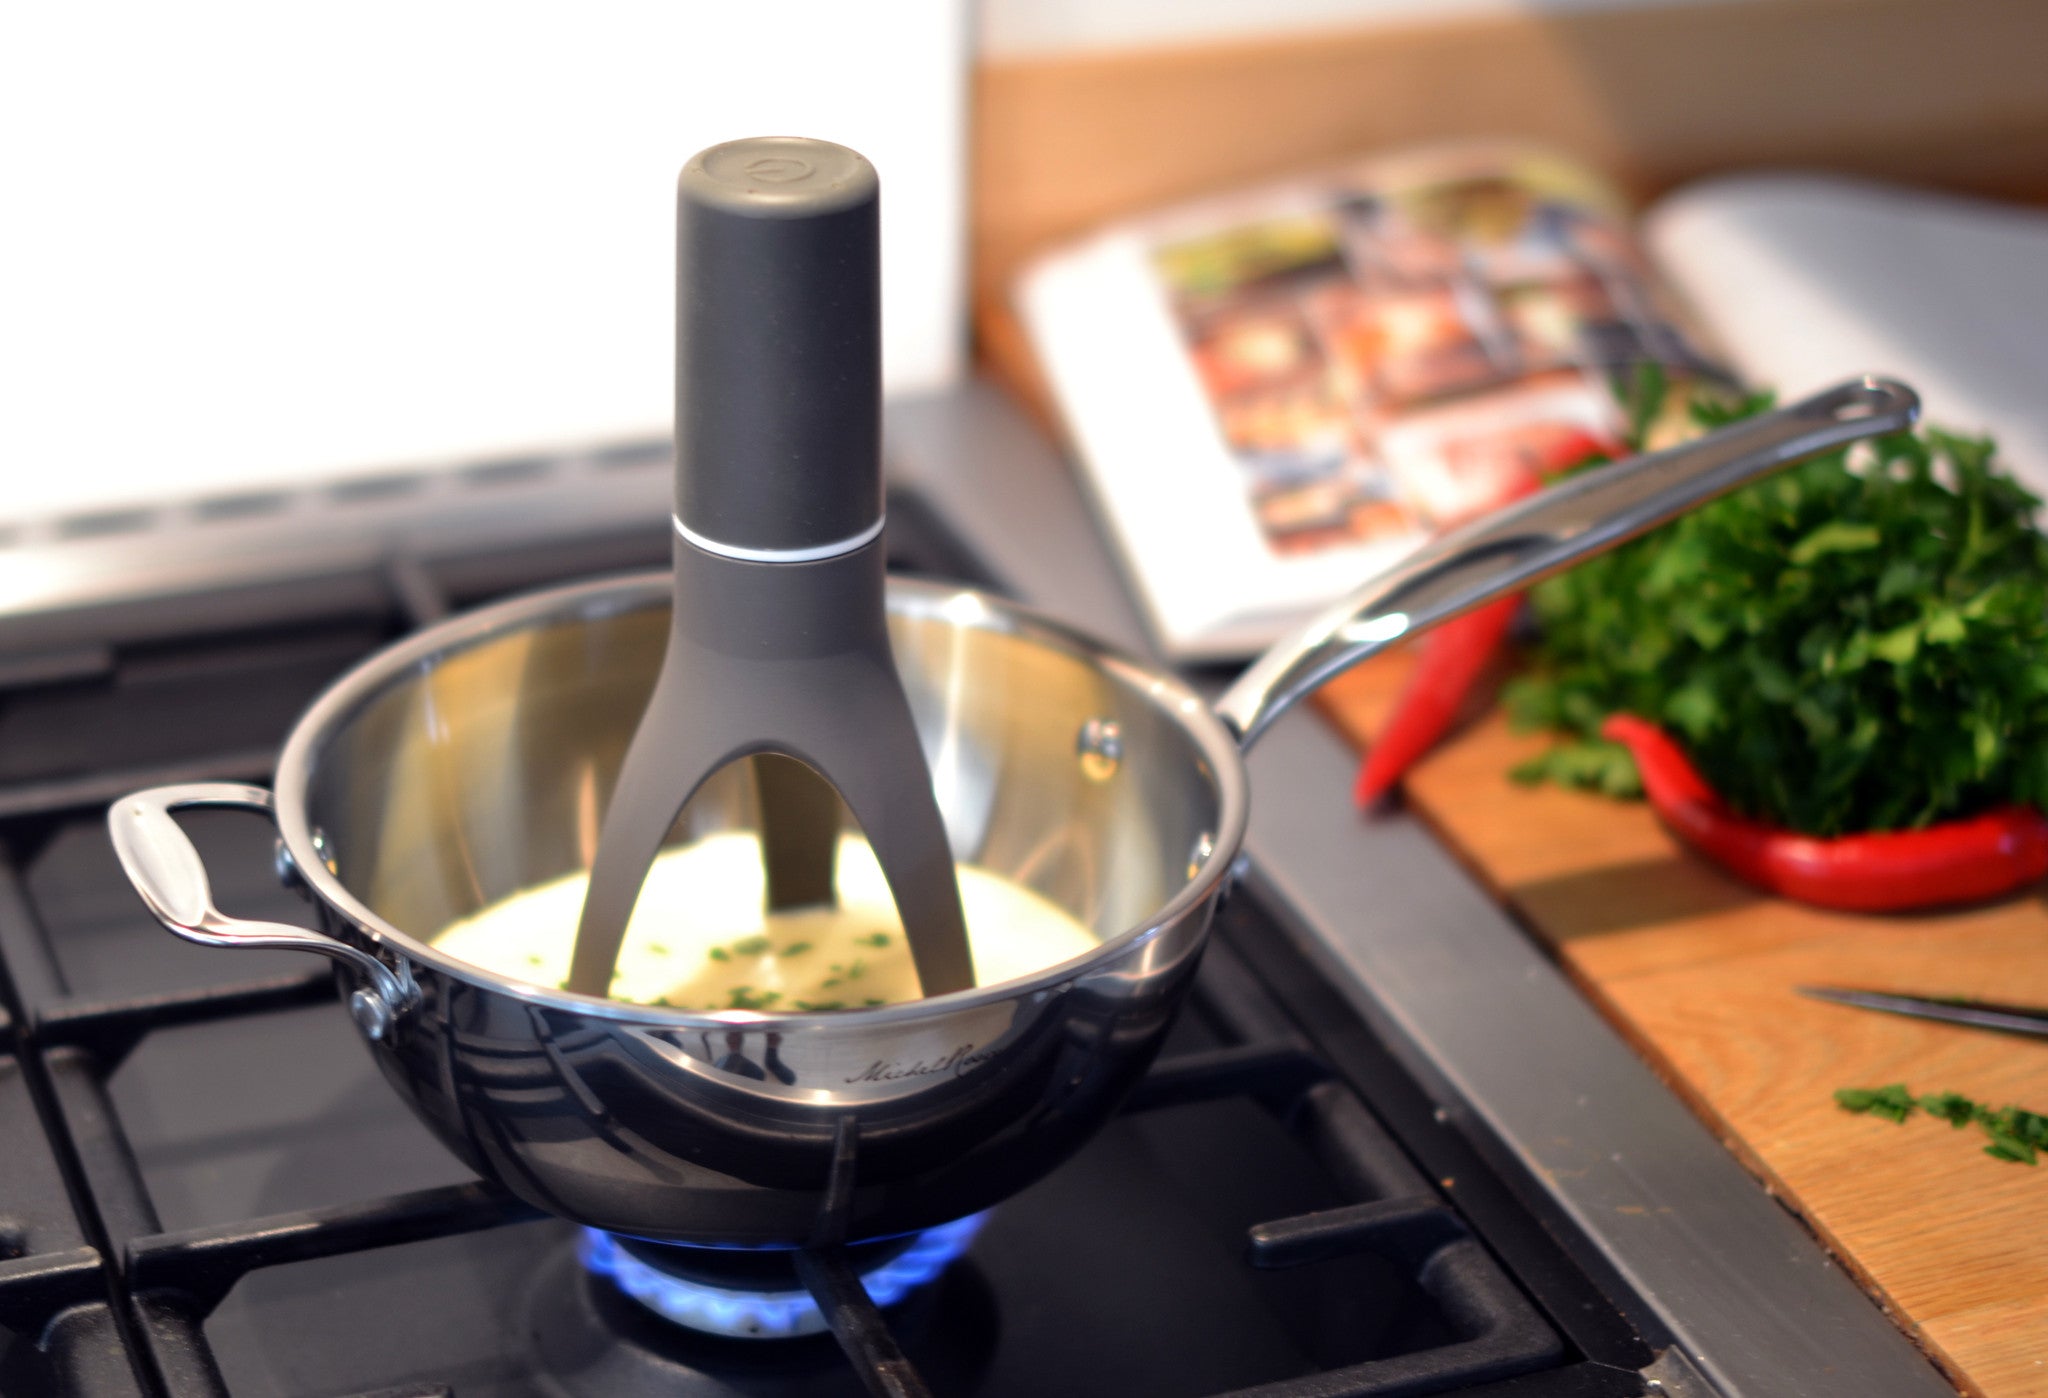 Electric Automatic Pan Stirrer Innovative Kitchen Utensil Mixer